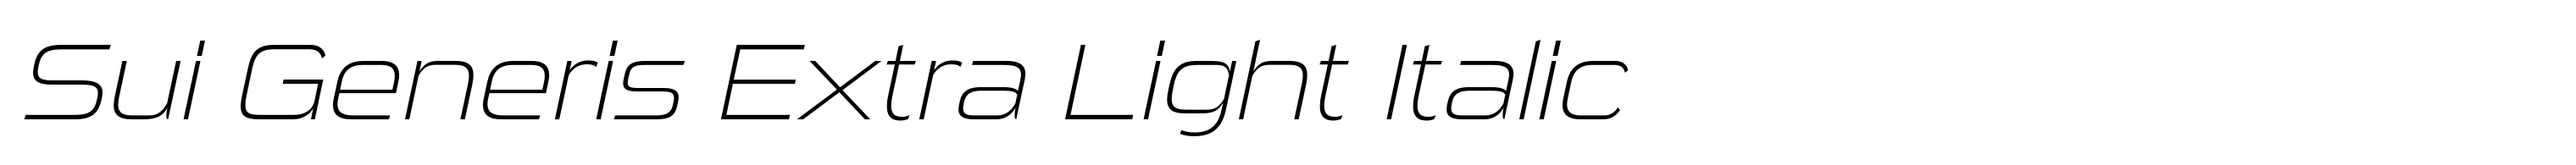 Sui Generis Extra Light Italic